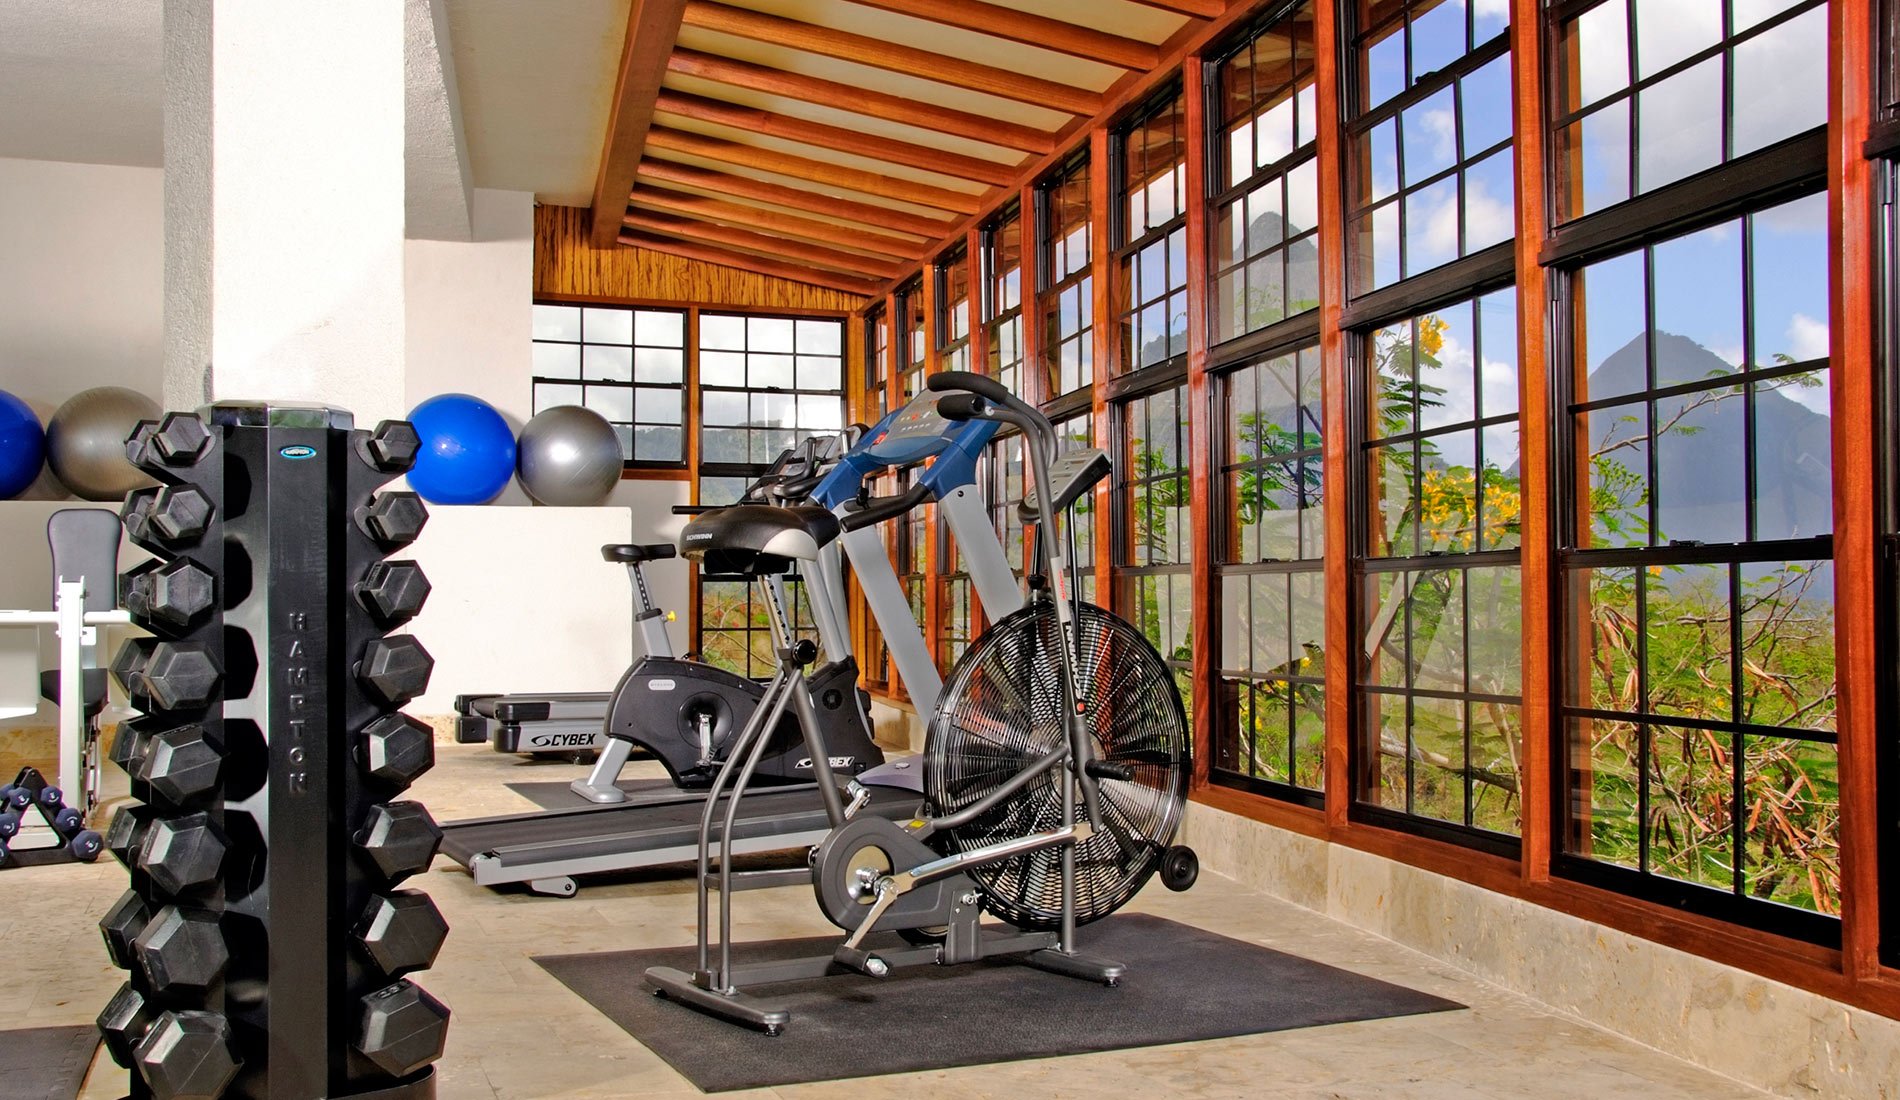 Hôtel de luxe Jade Mountain resort 5* Sainte-Lucie caraïbes salle de sport fitness